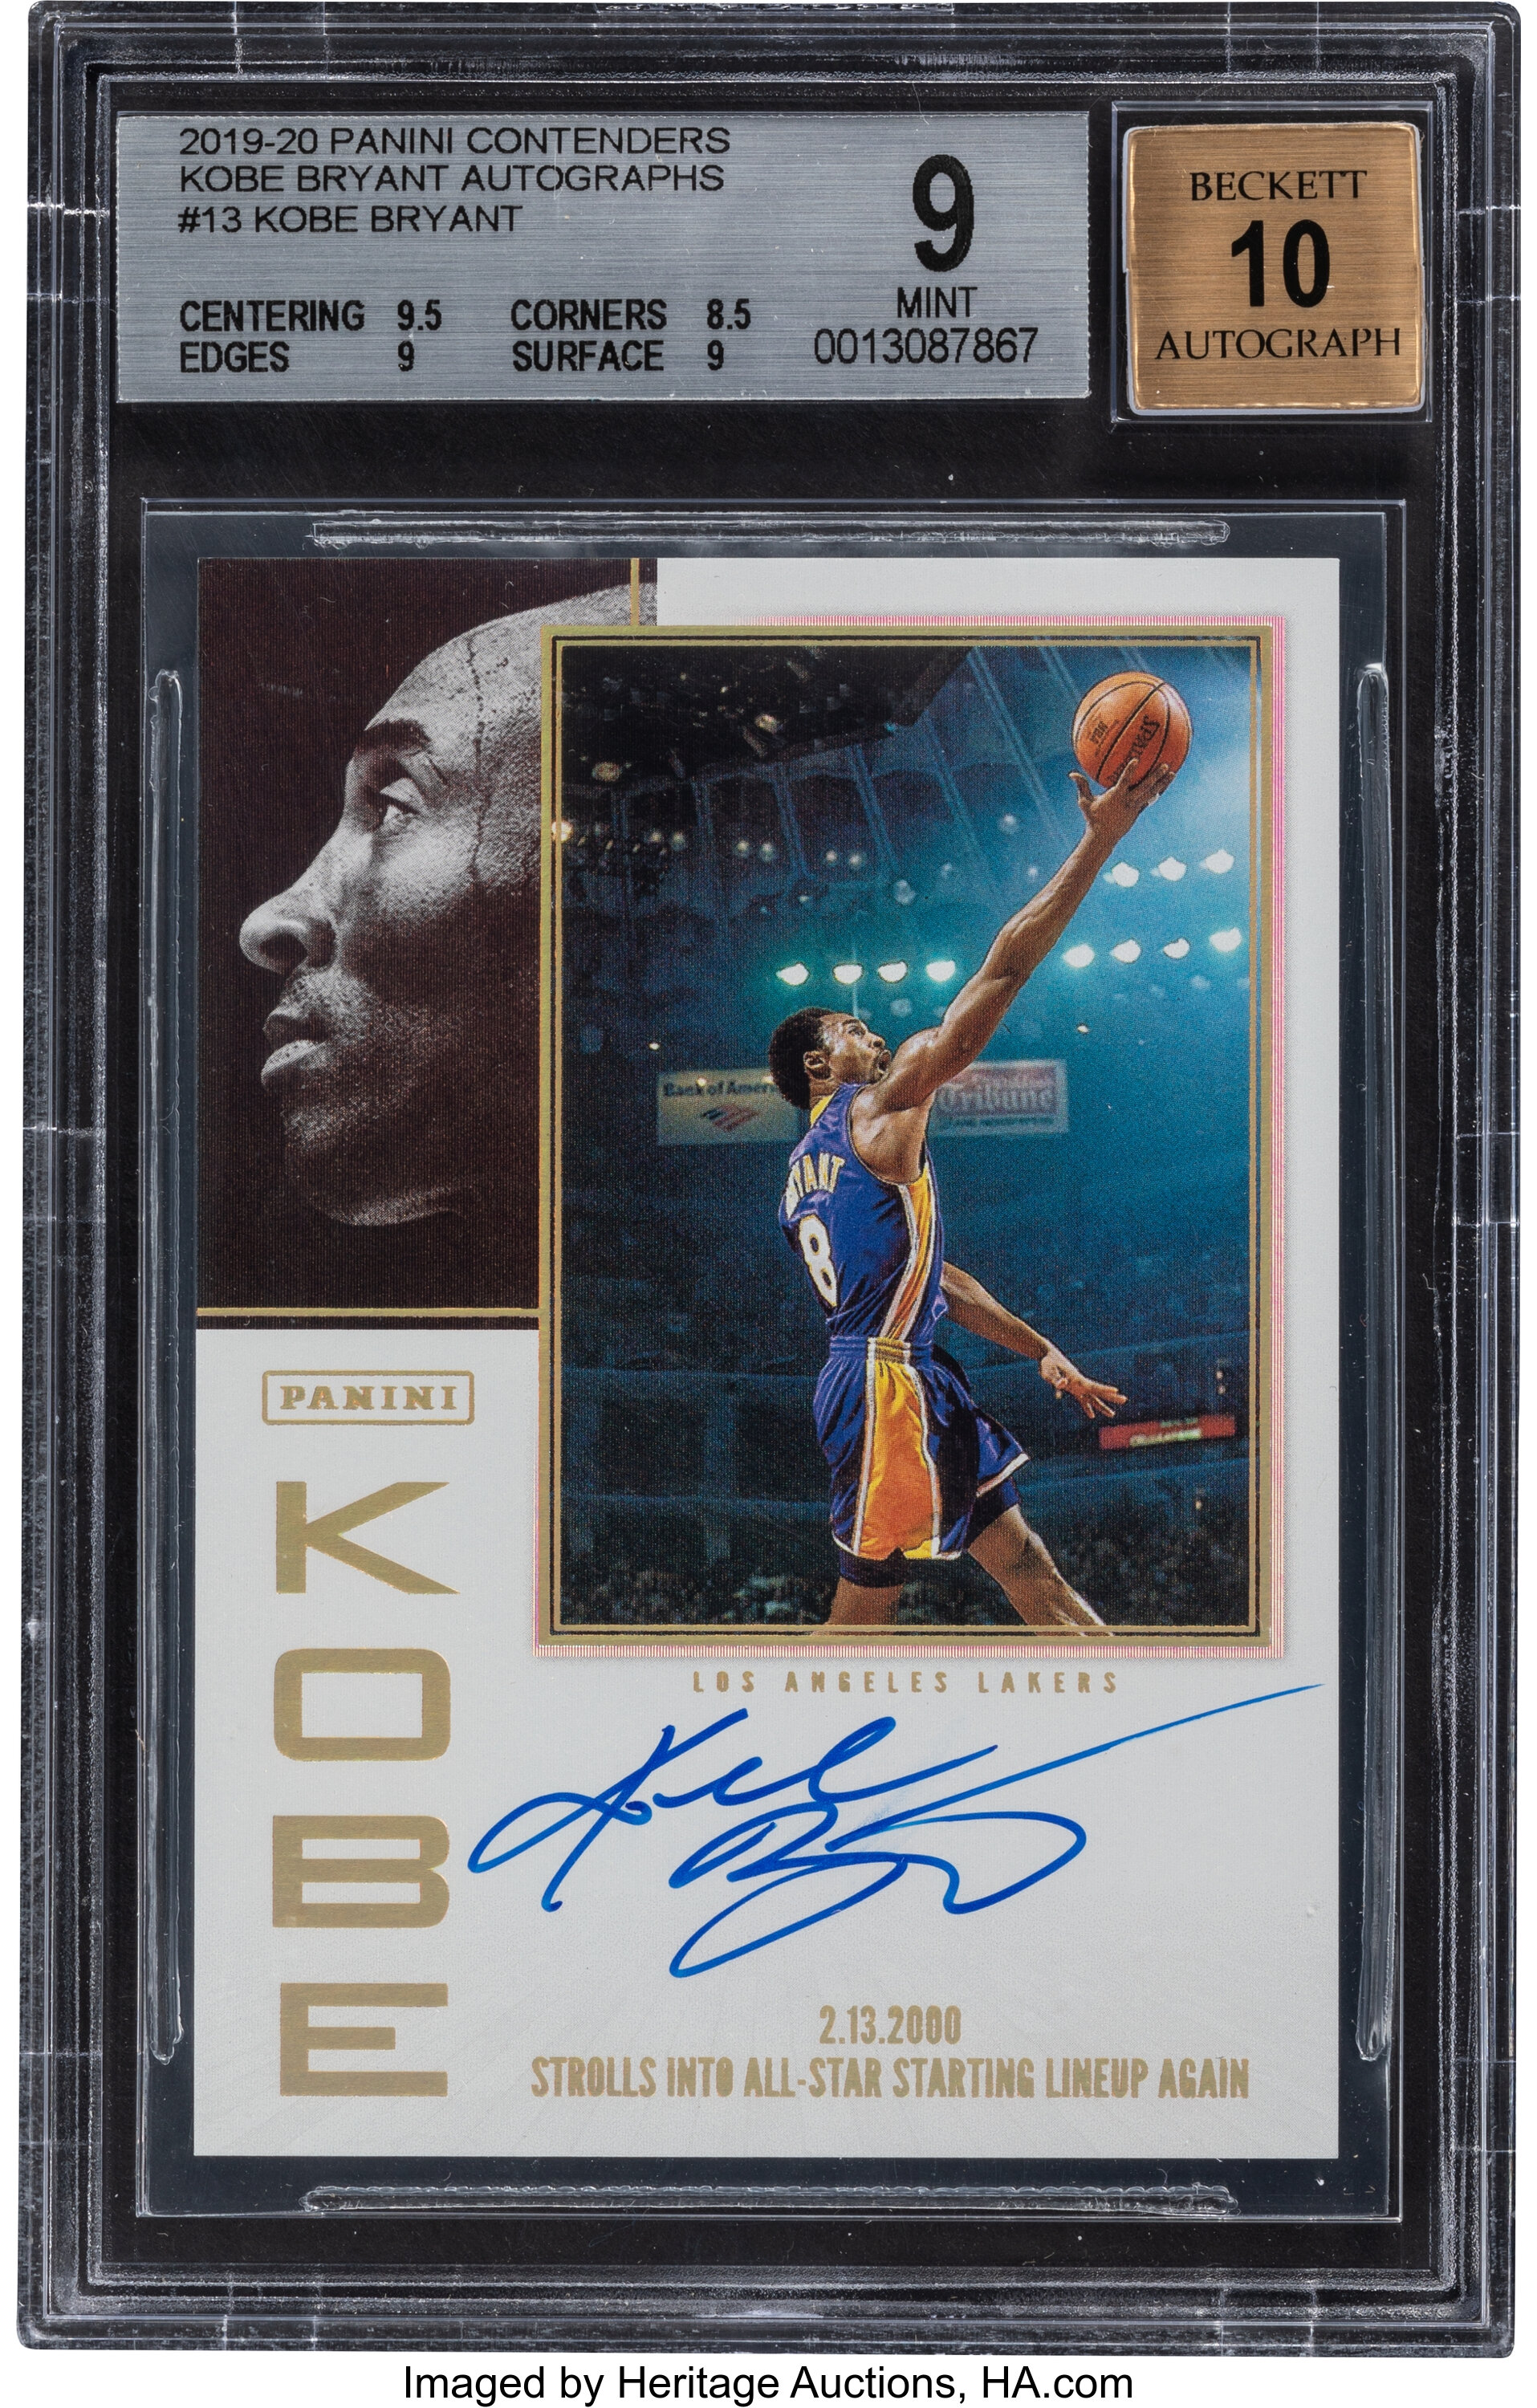 2019 Panini Contenders Kobe Bryant Autographs Basketball Card Set